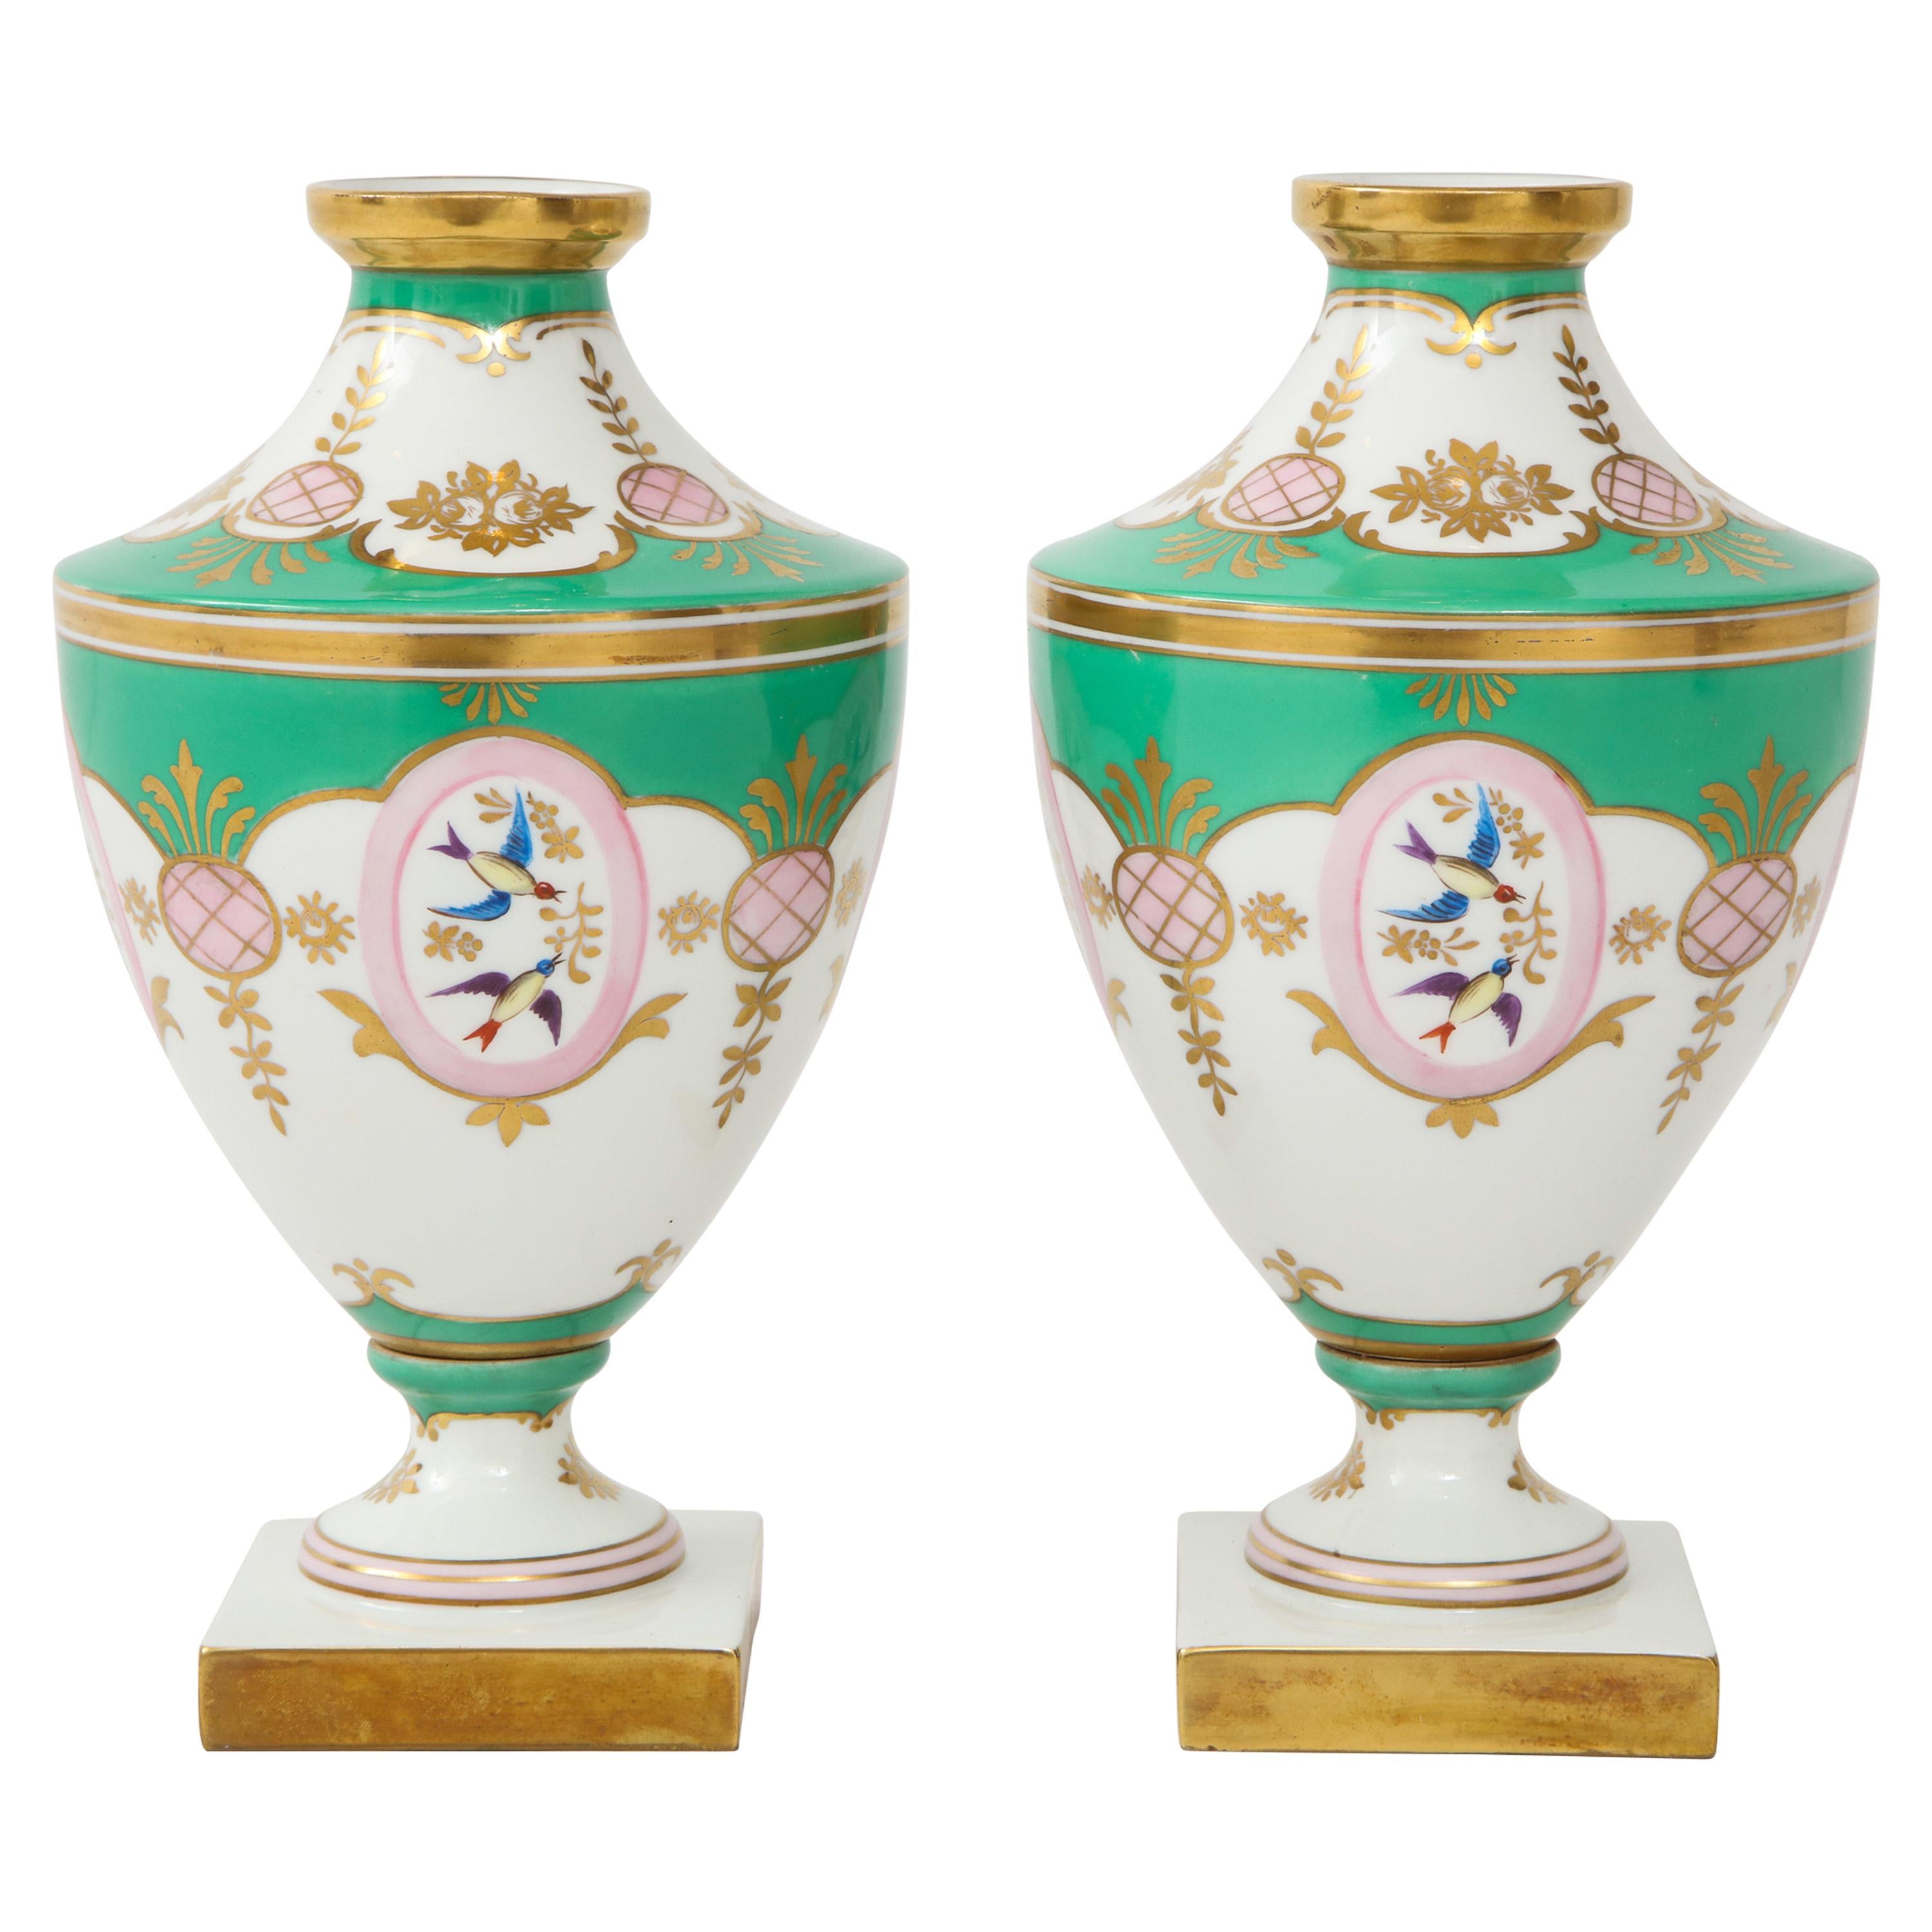 Pair of 19th Century Porcelain Urn Vases